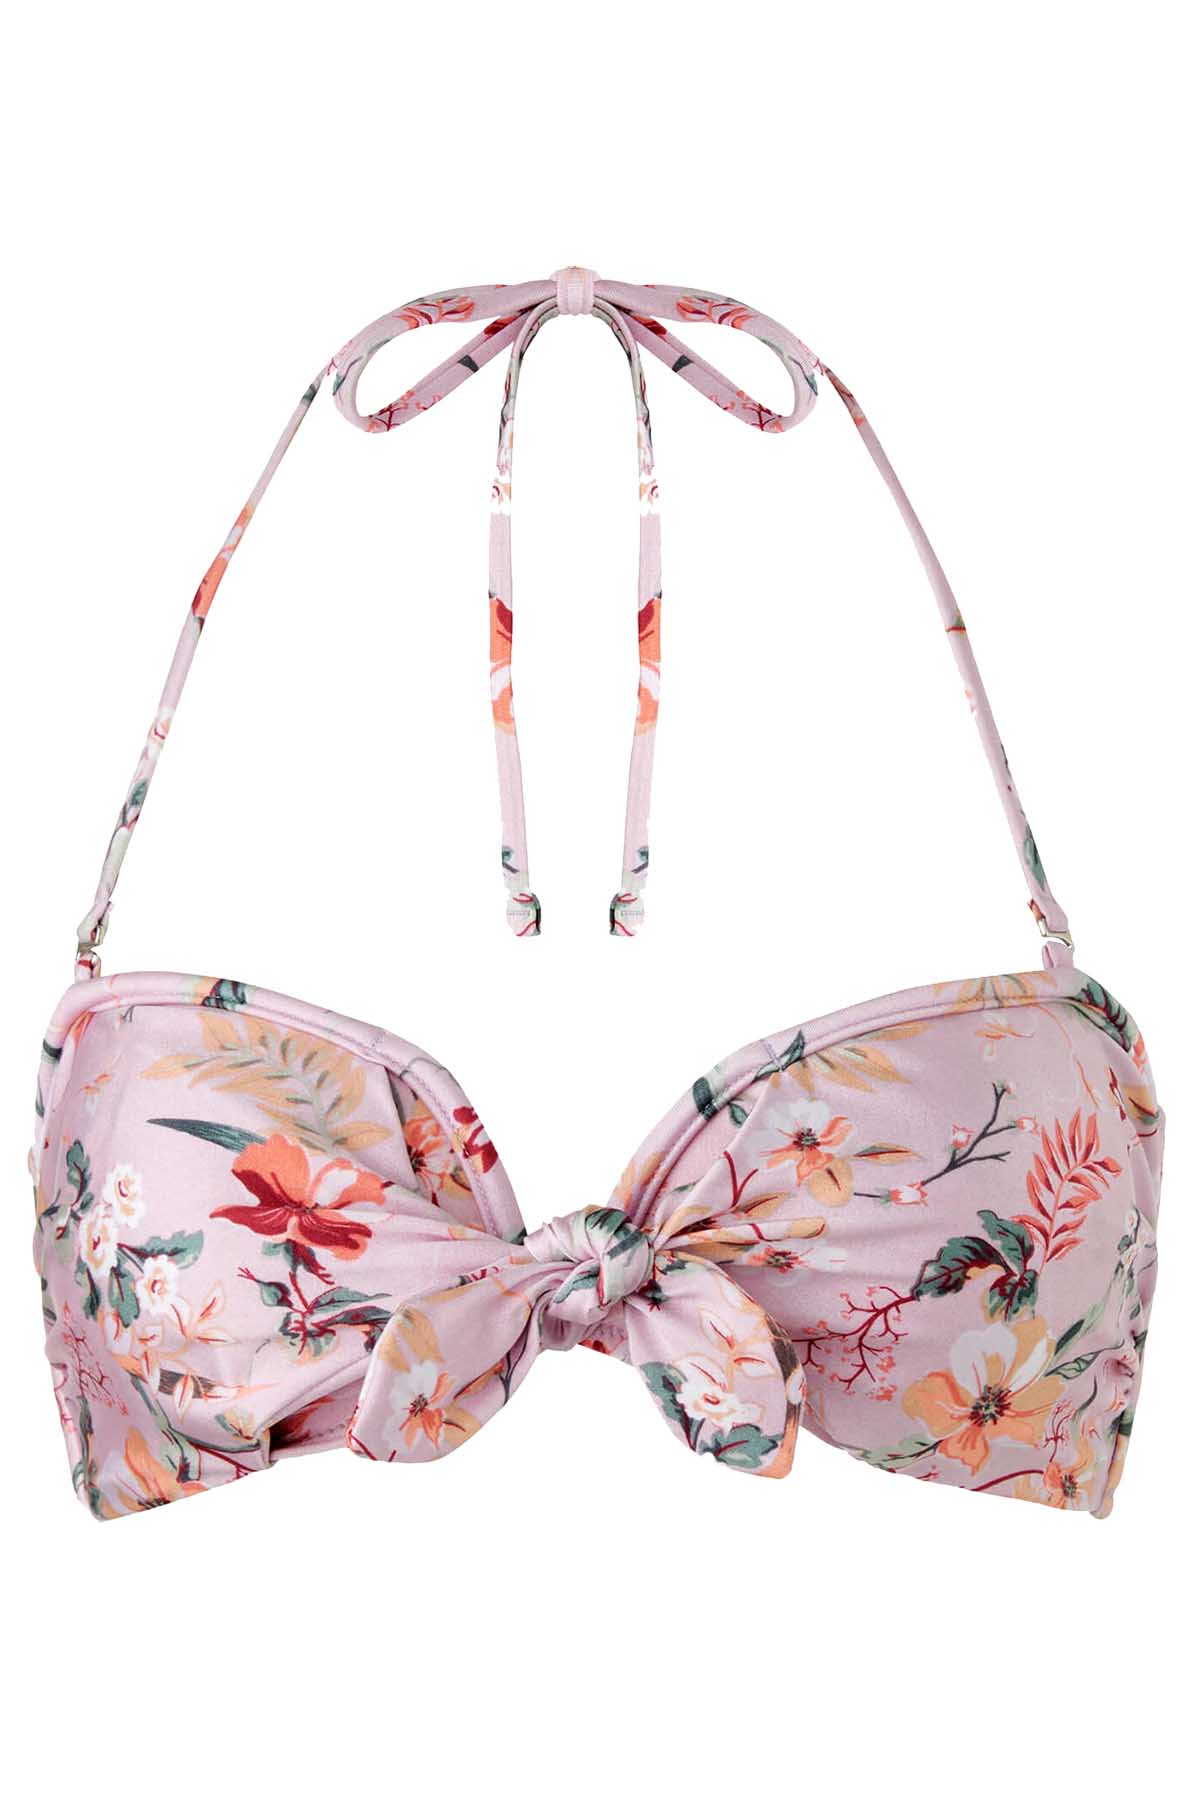 MINKPINK Summer Meadow Tie Bandeau Convertible Bikini Top in Floral Mu ...